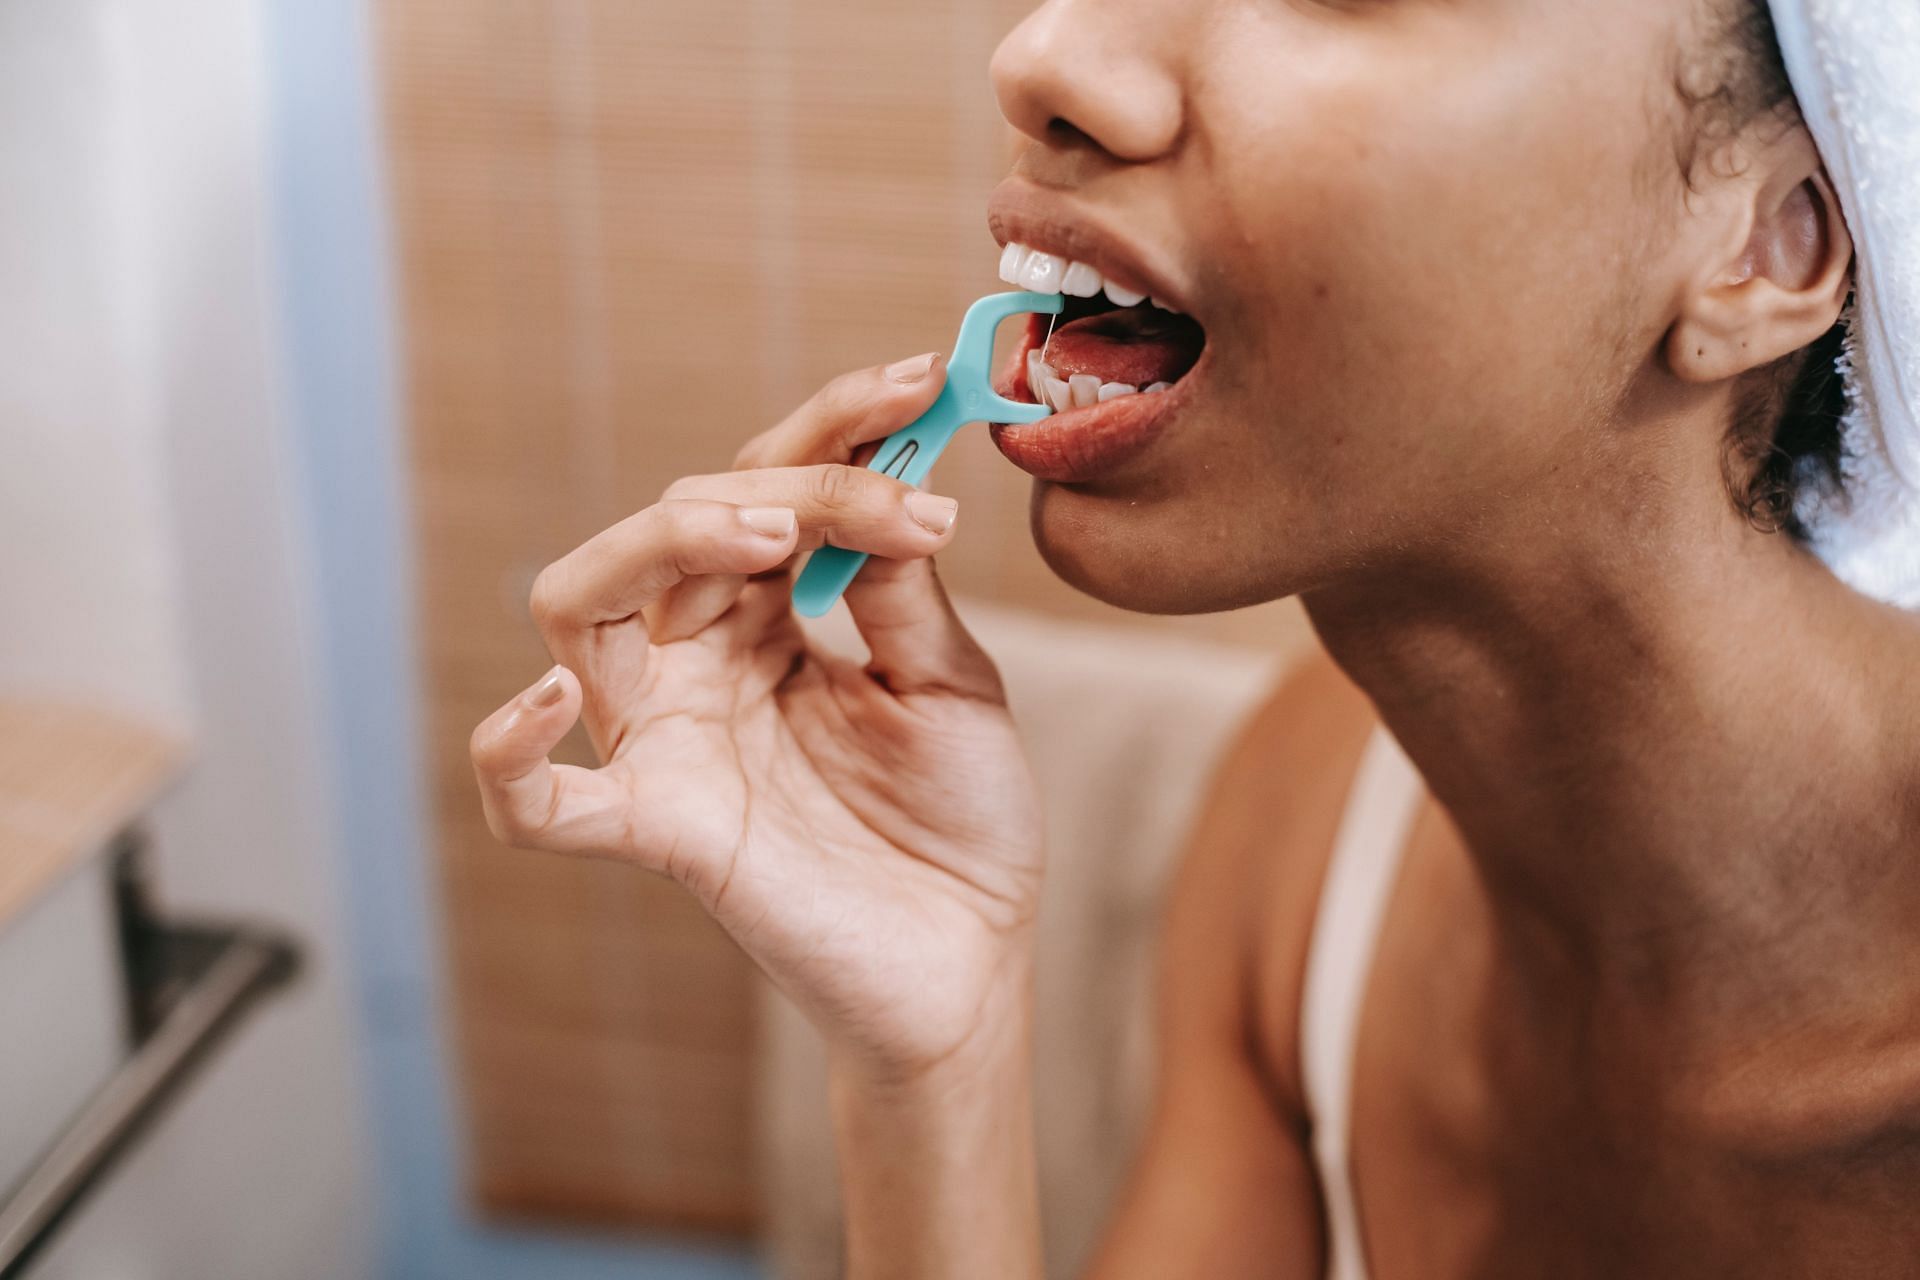 Flossing teeth is an important part of maintaining good oral hygiene (Image via Pexels @Sora Shimazaki)